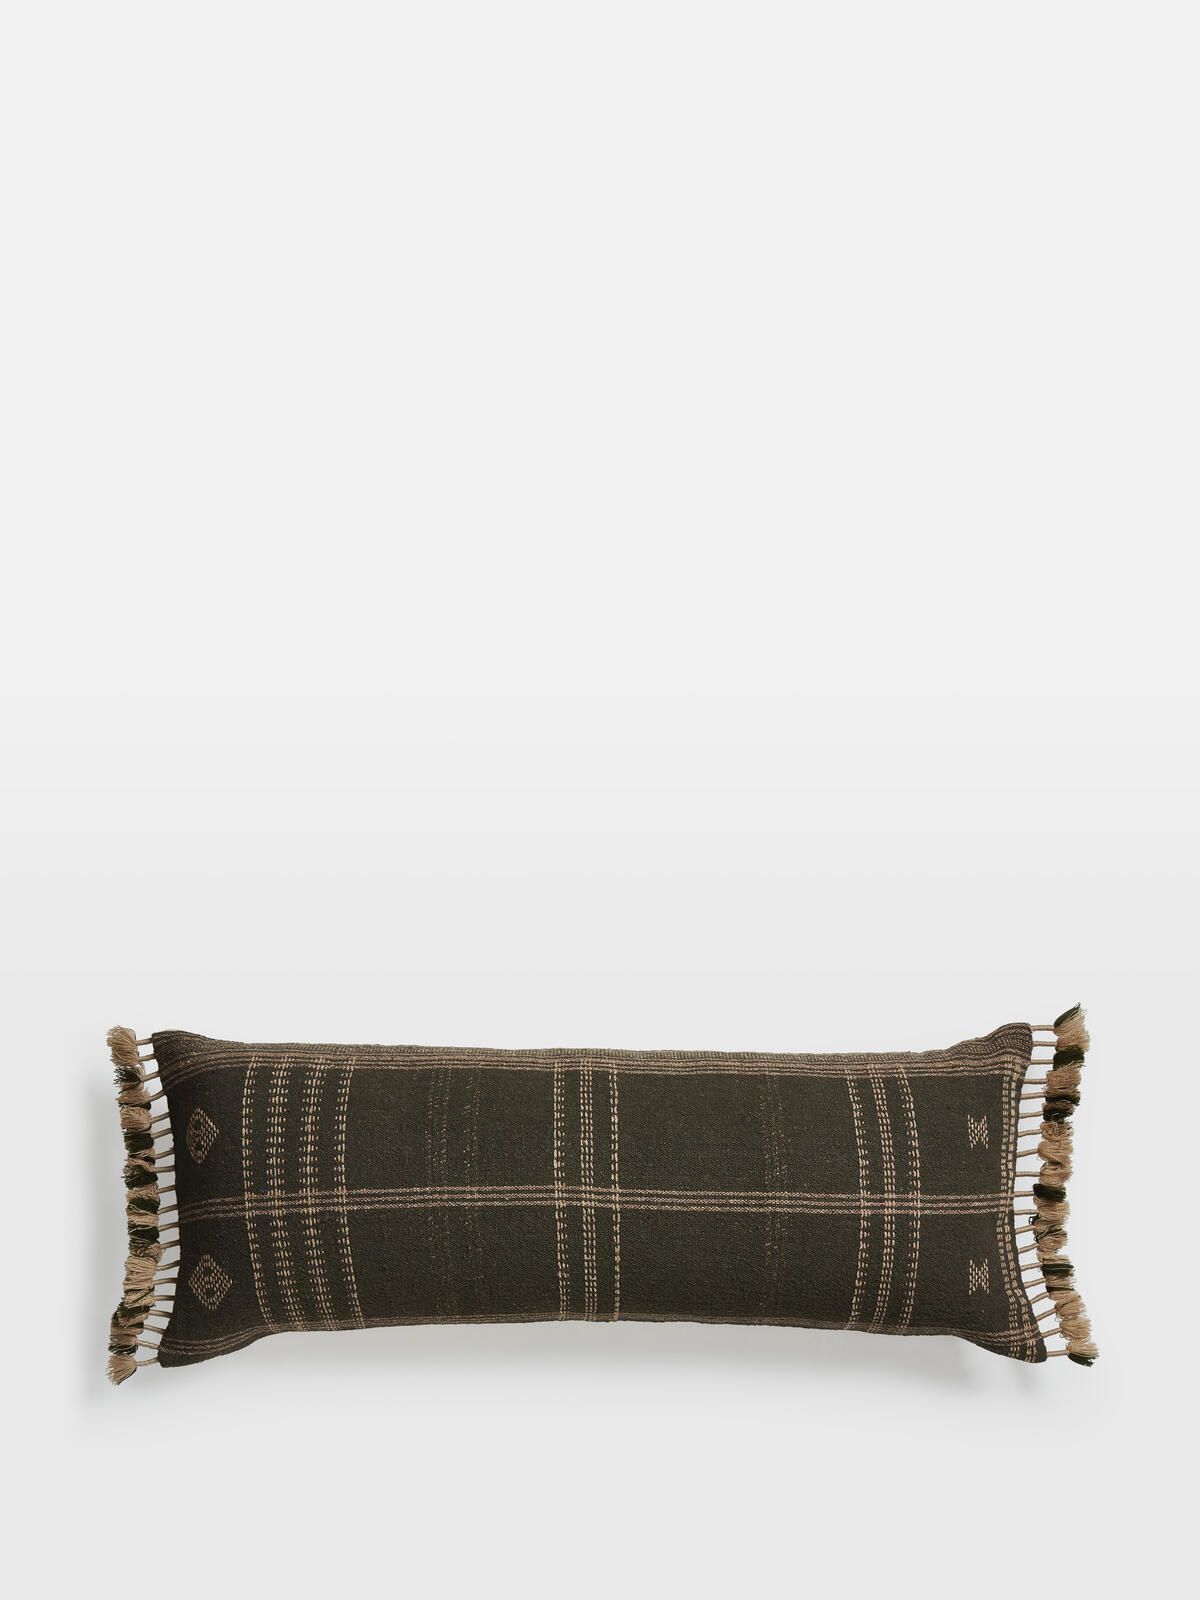 Oorvi Cushion, Charcoal | Soho Home Ltd